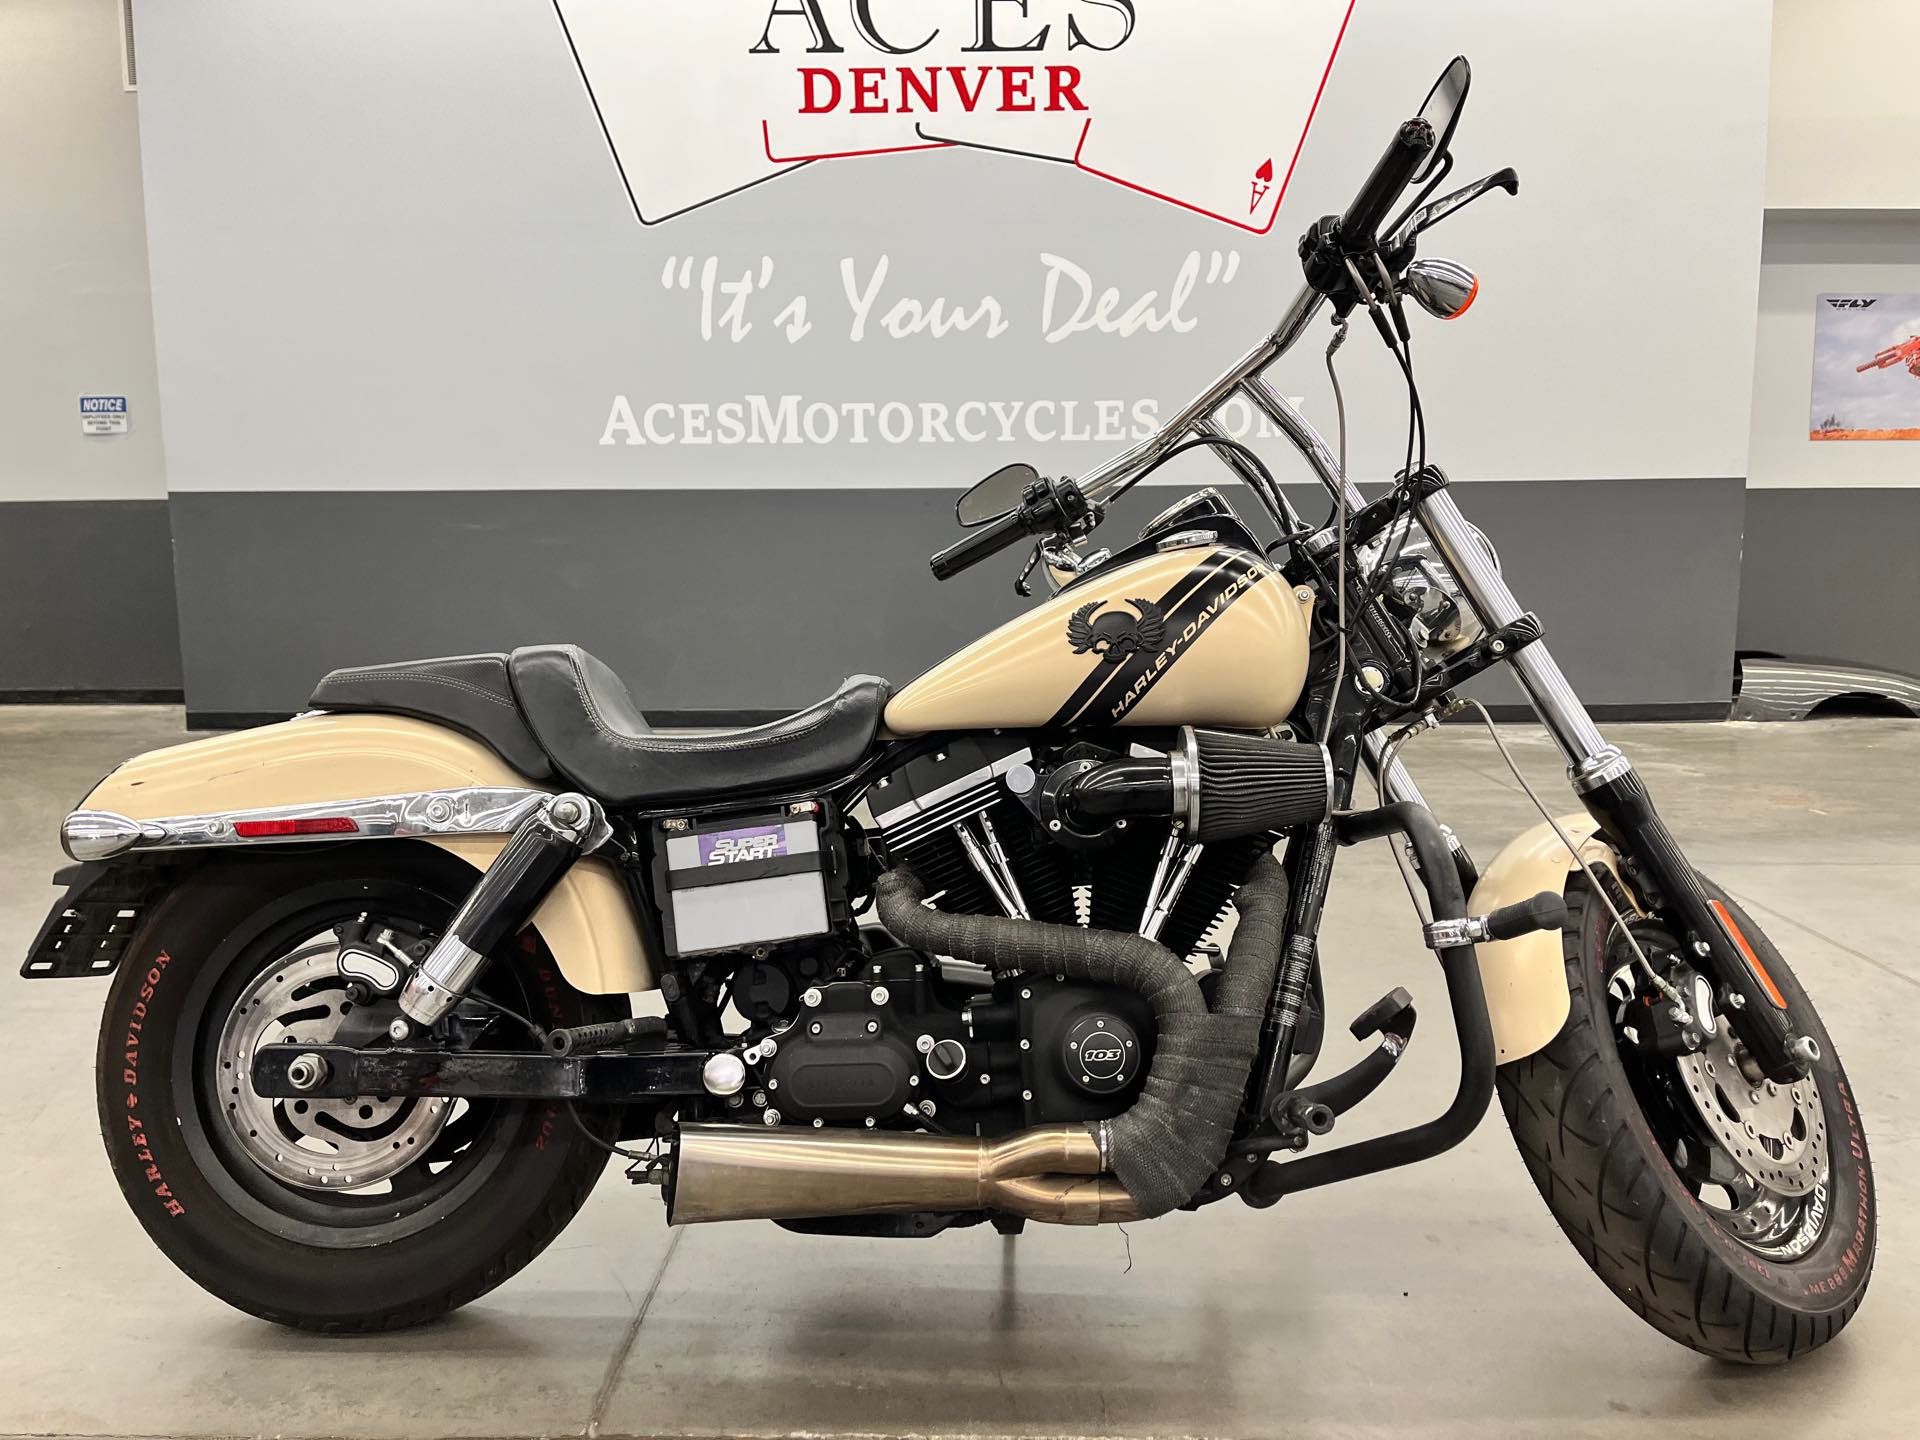 2014 Harley-Davidson Dyna Fat Bob at Aces Motorcycles - Denver